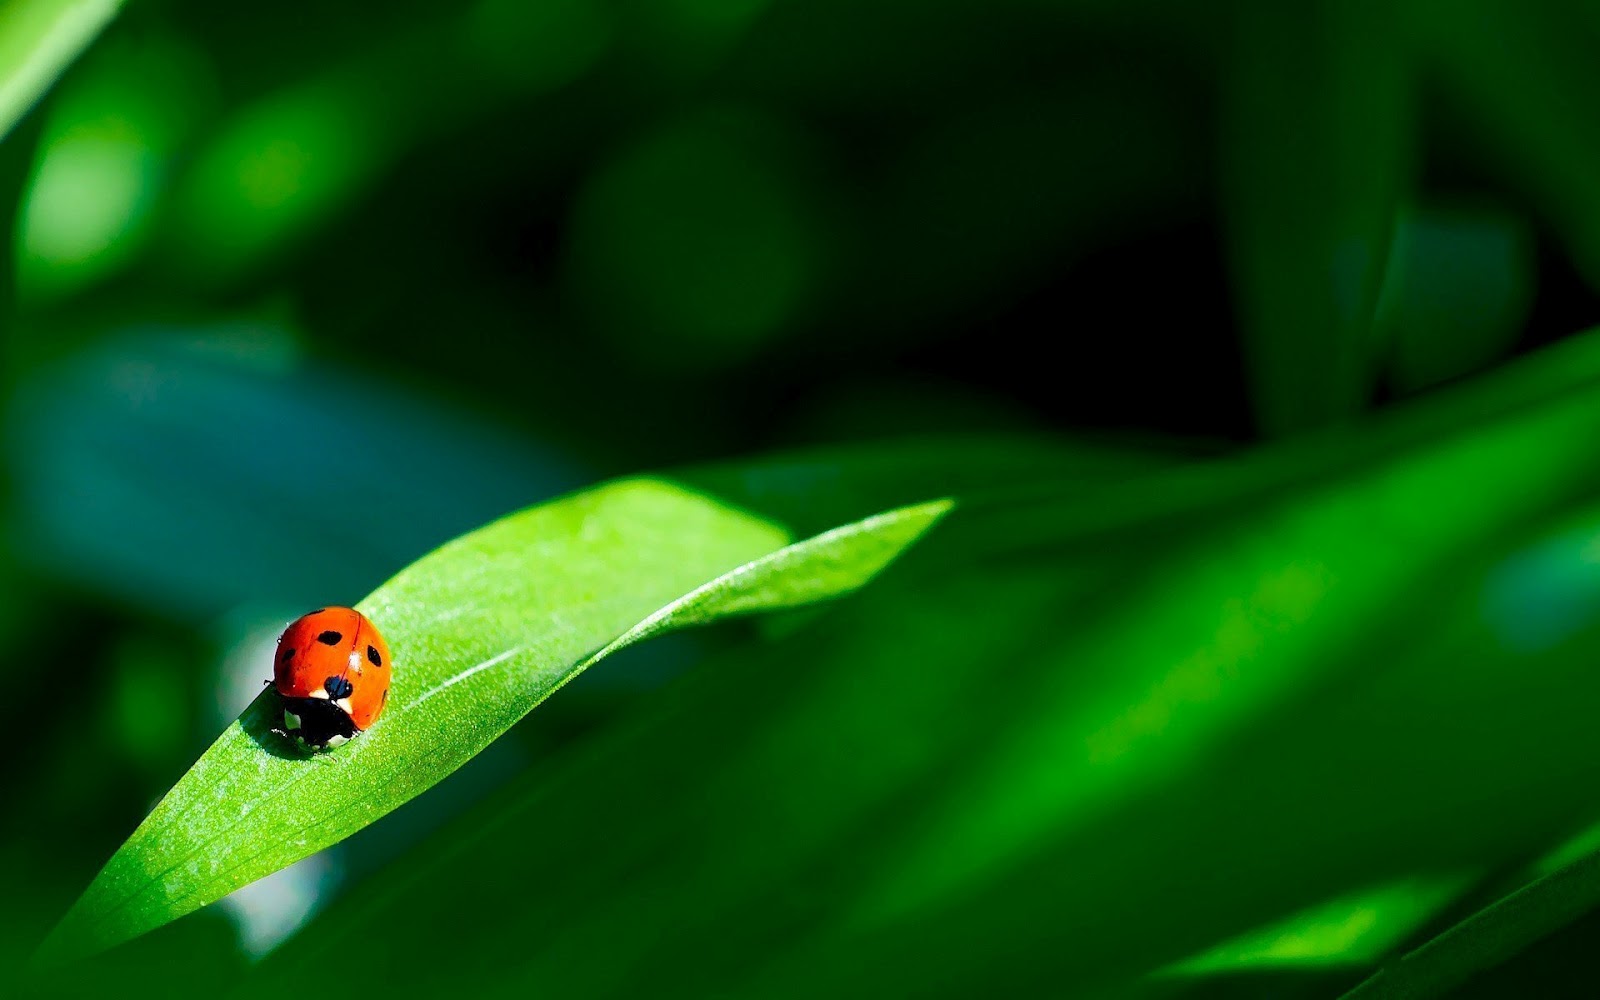 HD Animal Wallpaper With A Ladybug Walking On Green Leaf